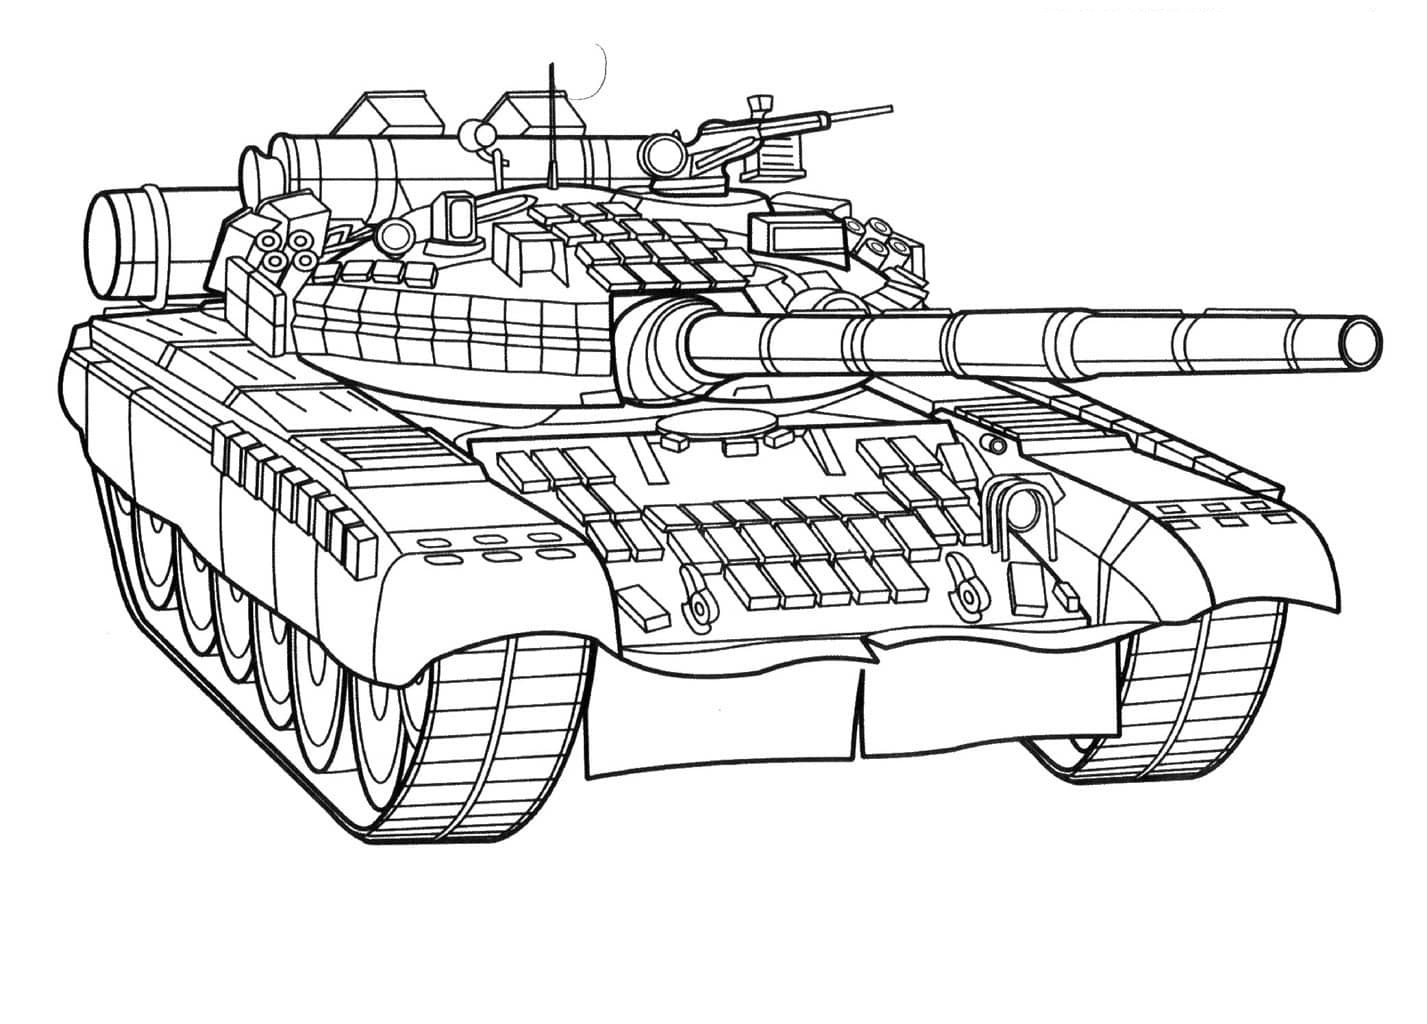 Настоящий танк из Tank